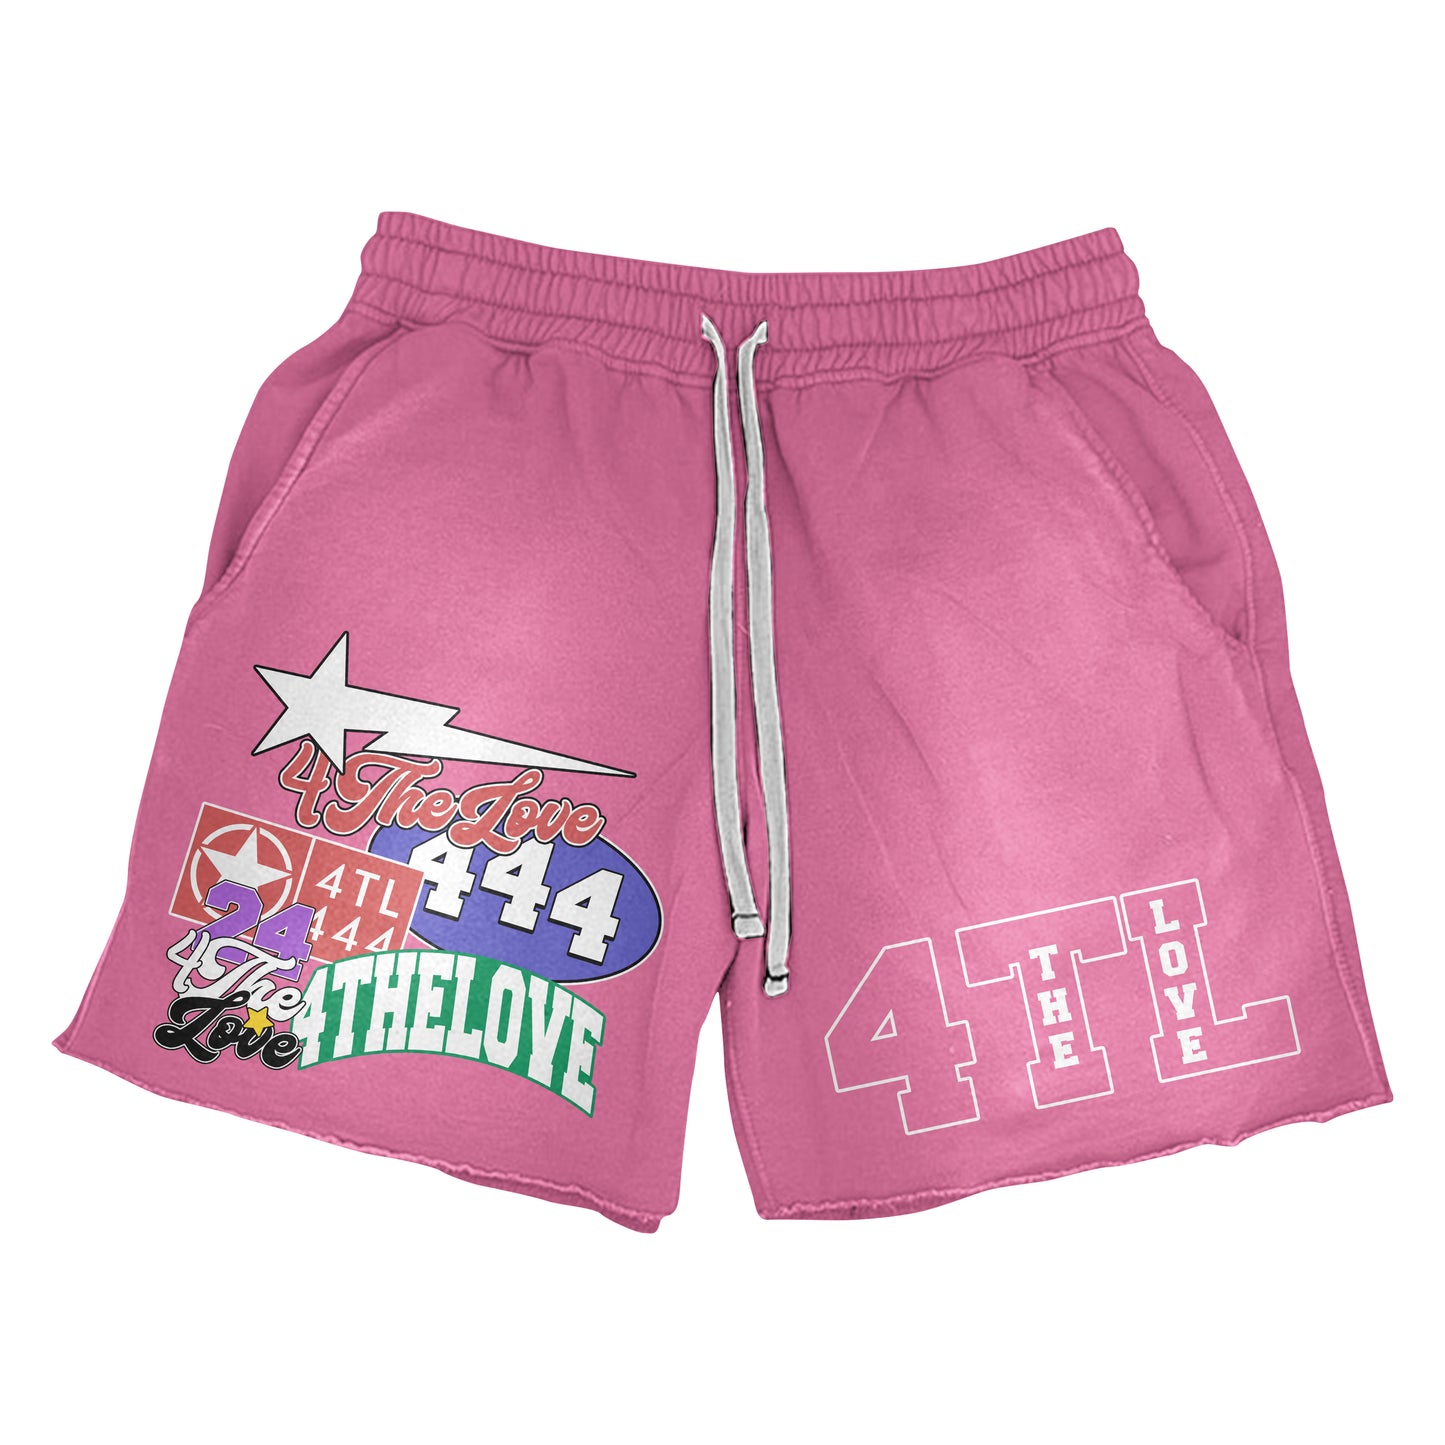 Summer pack shorts (pink)